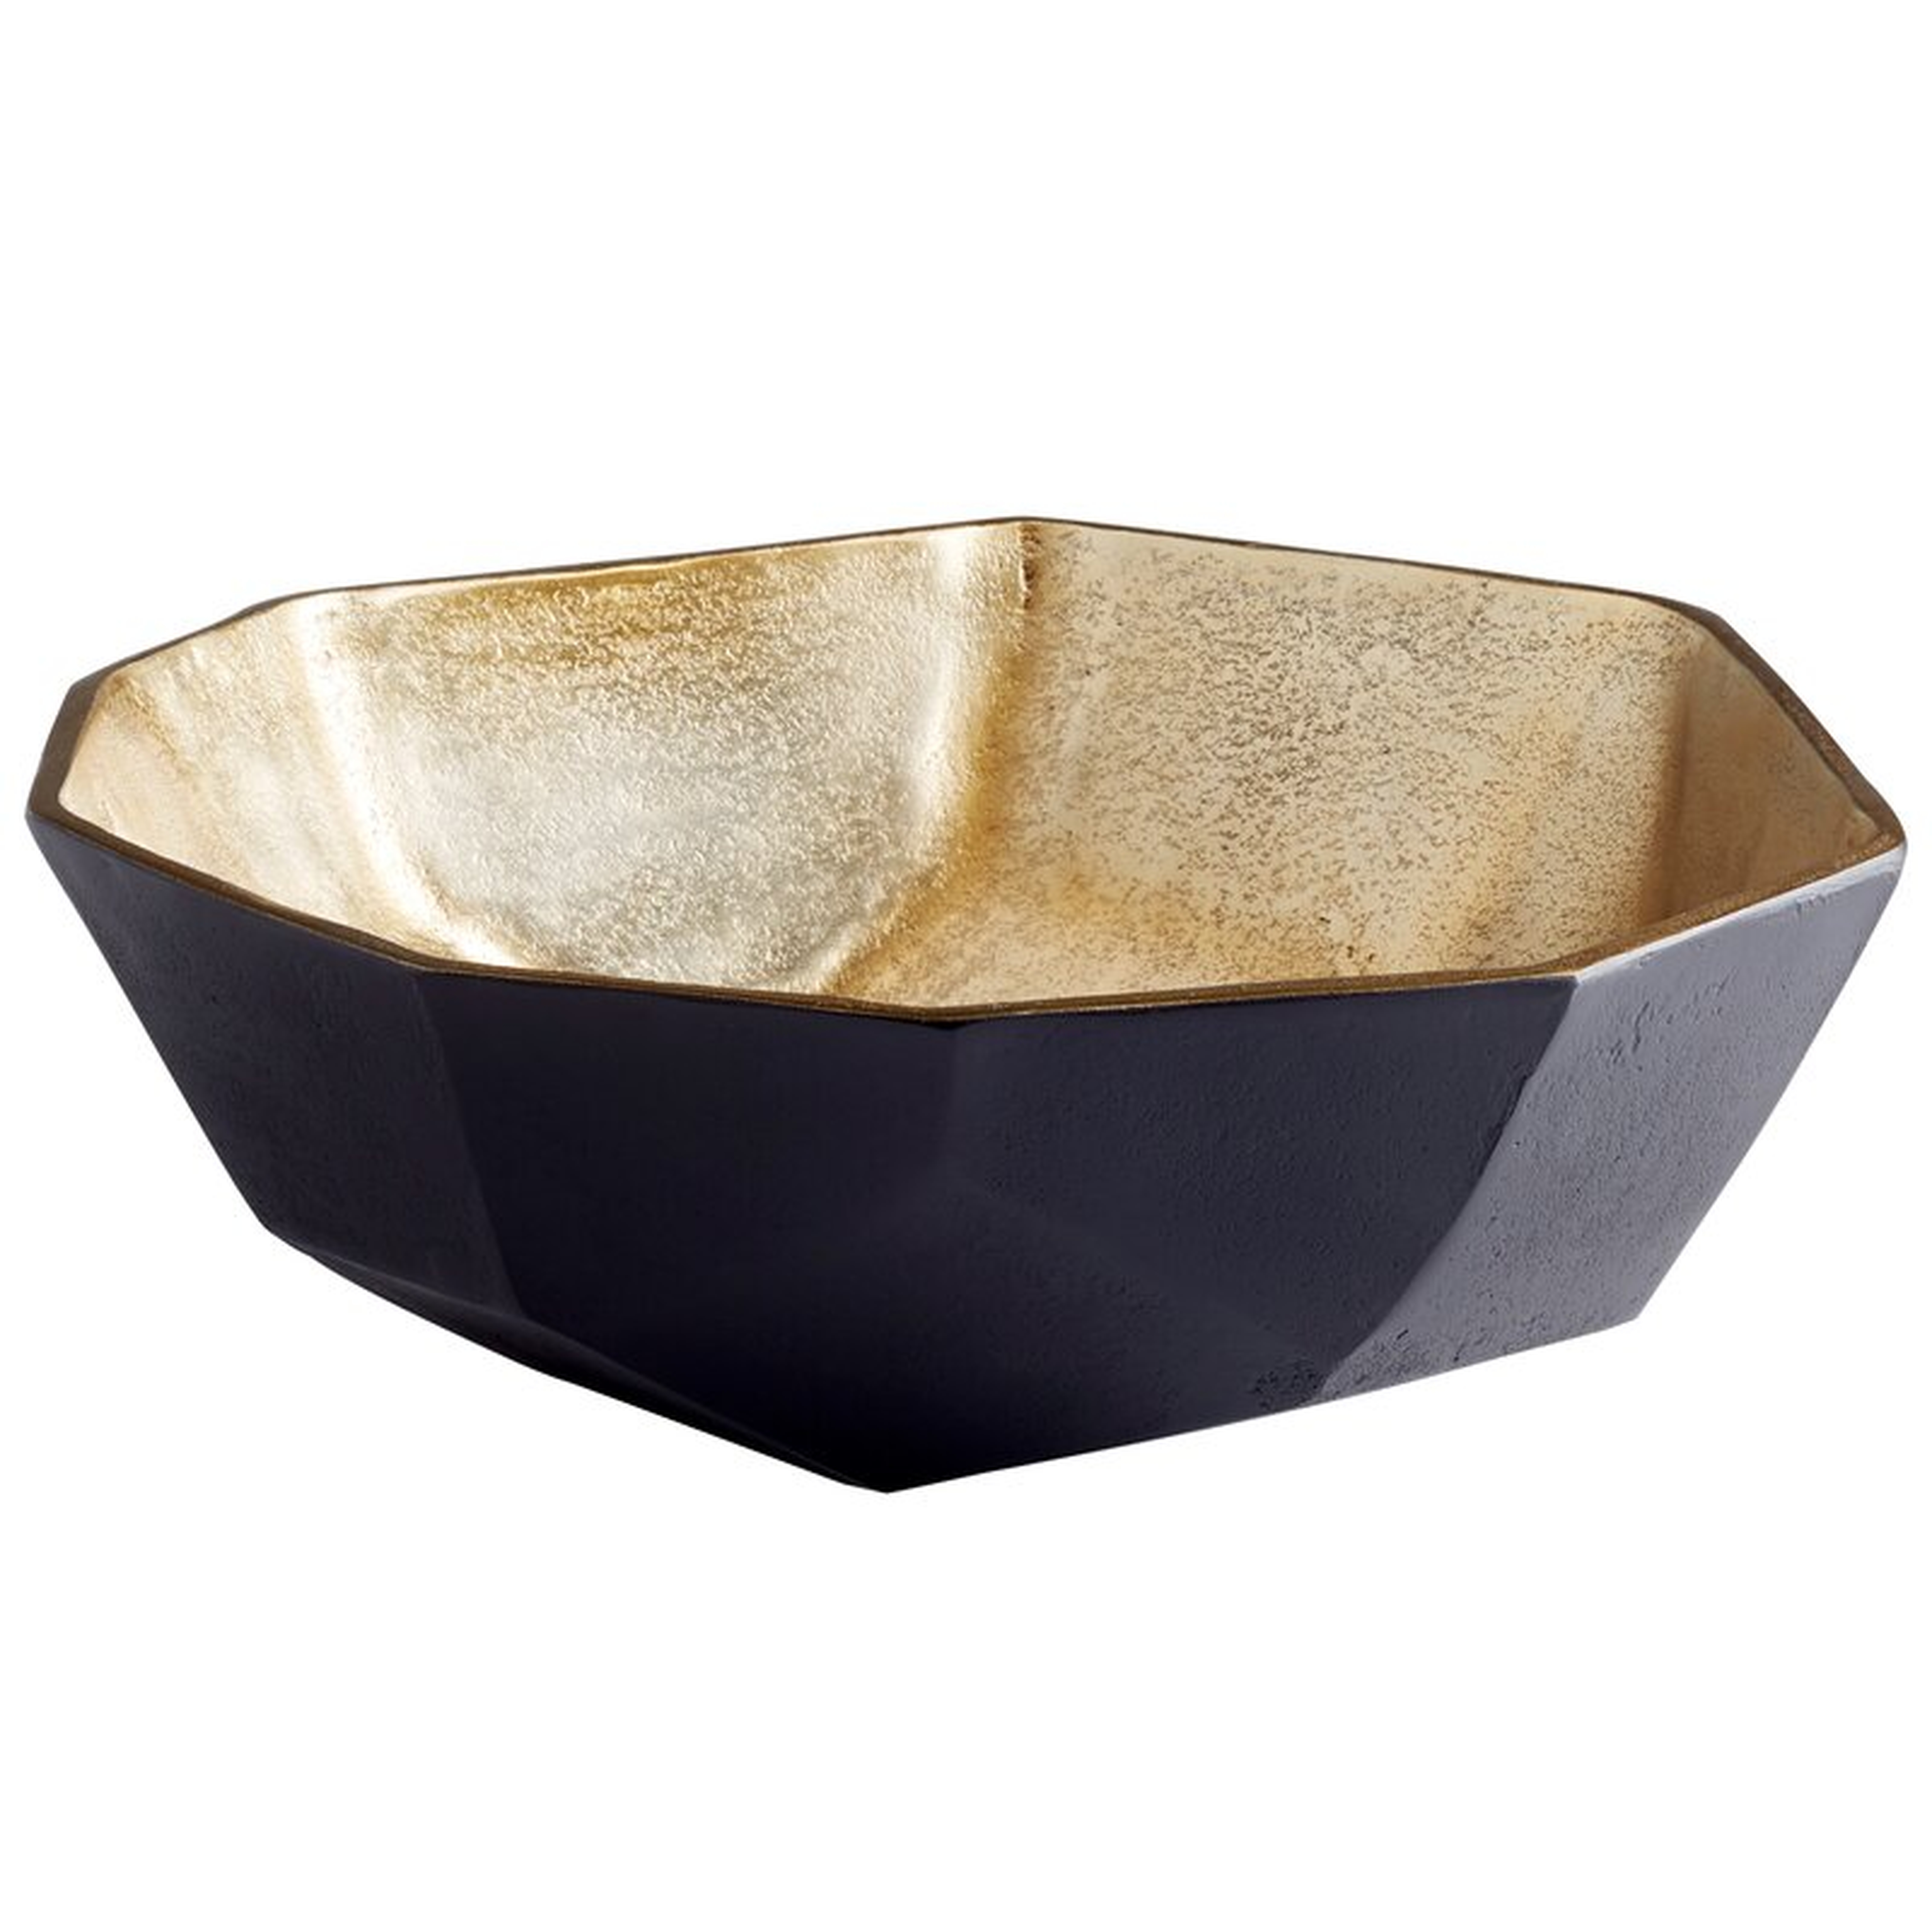 Cyan Design Radia Stainless Steel Glam Decorative Bowl in Matte Black/Gold - Perigold